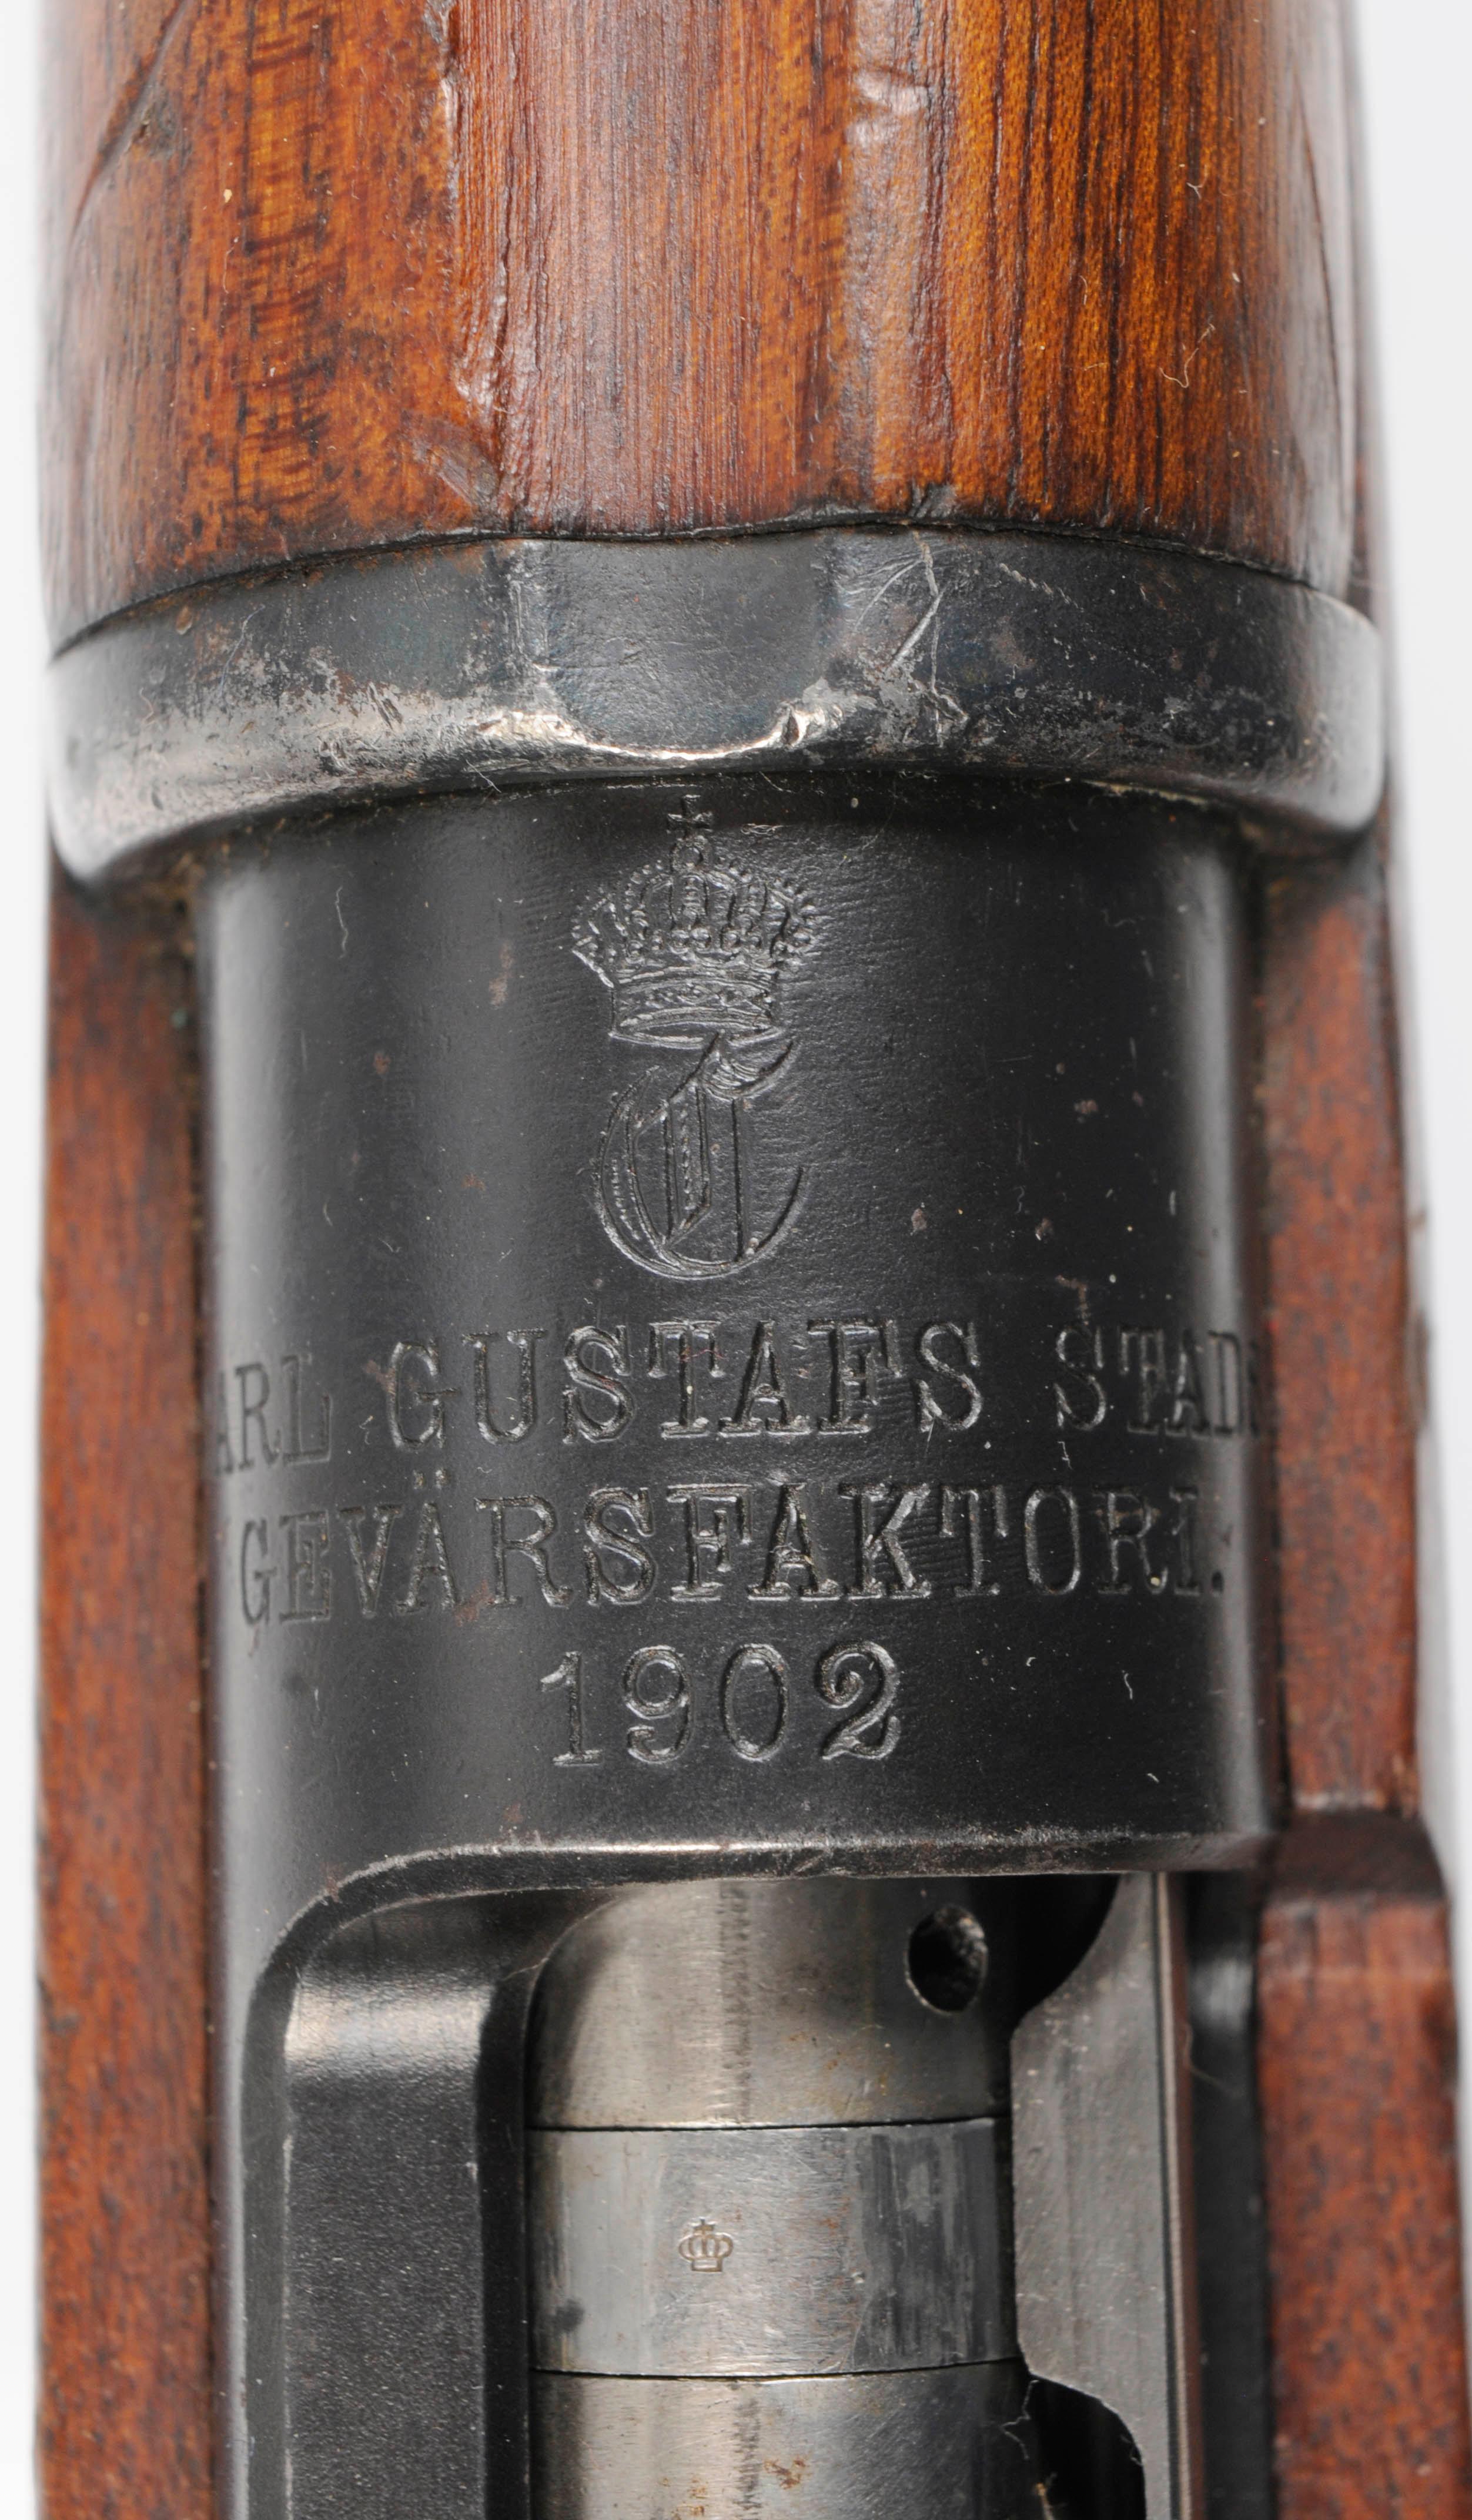 Swedish Mauser Model 1896 6.5x55mm Bolt Action Rifle - FFL #106510 (RHE 1)